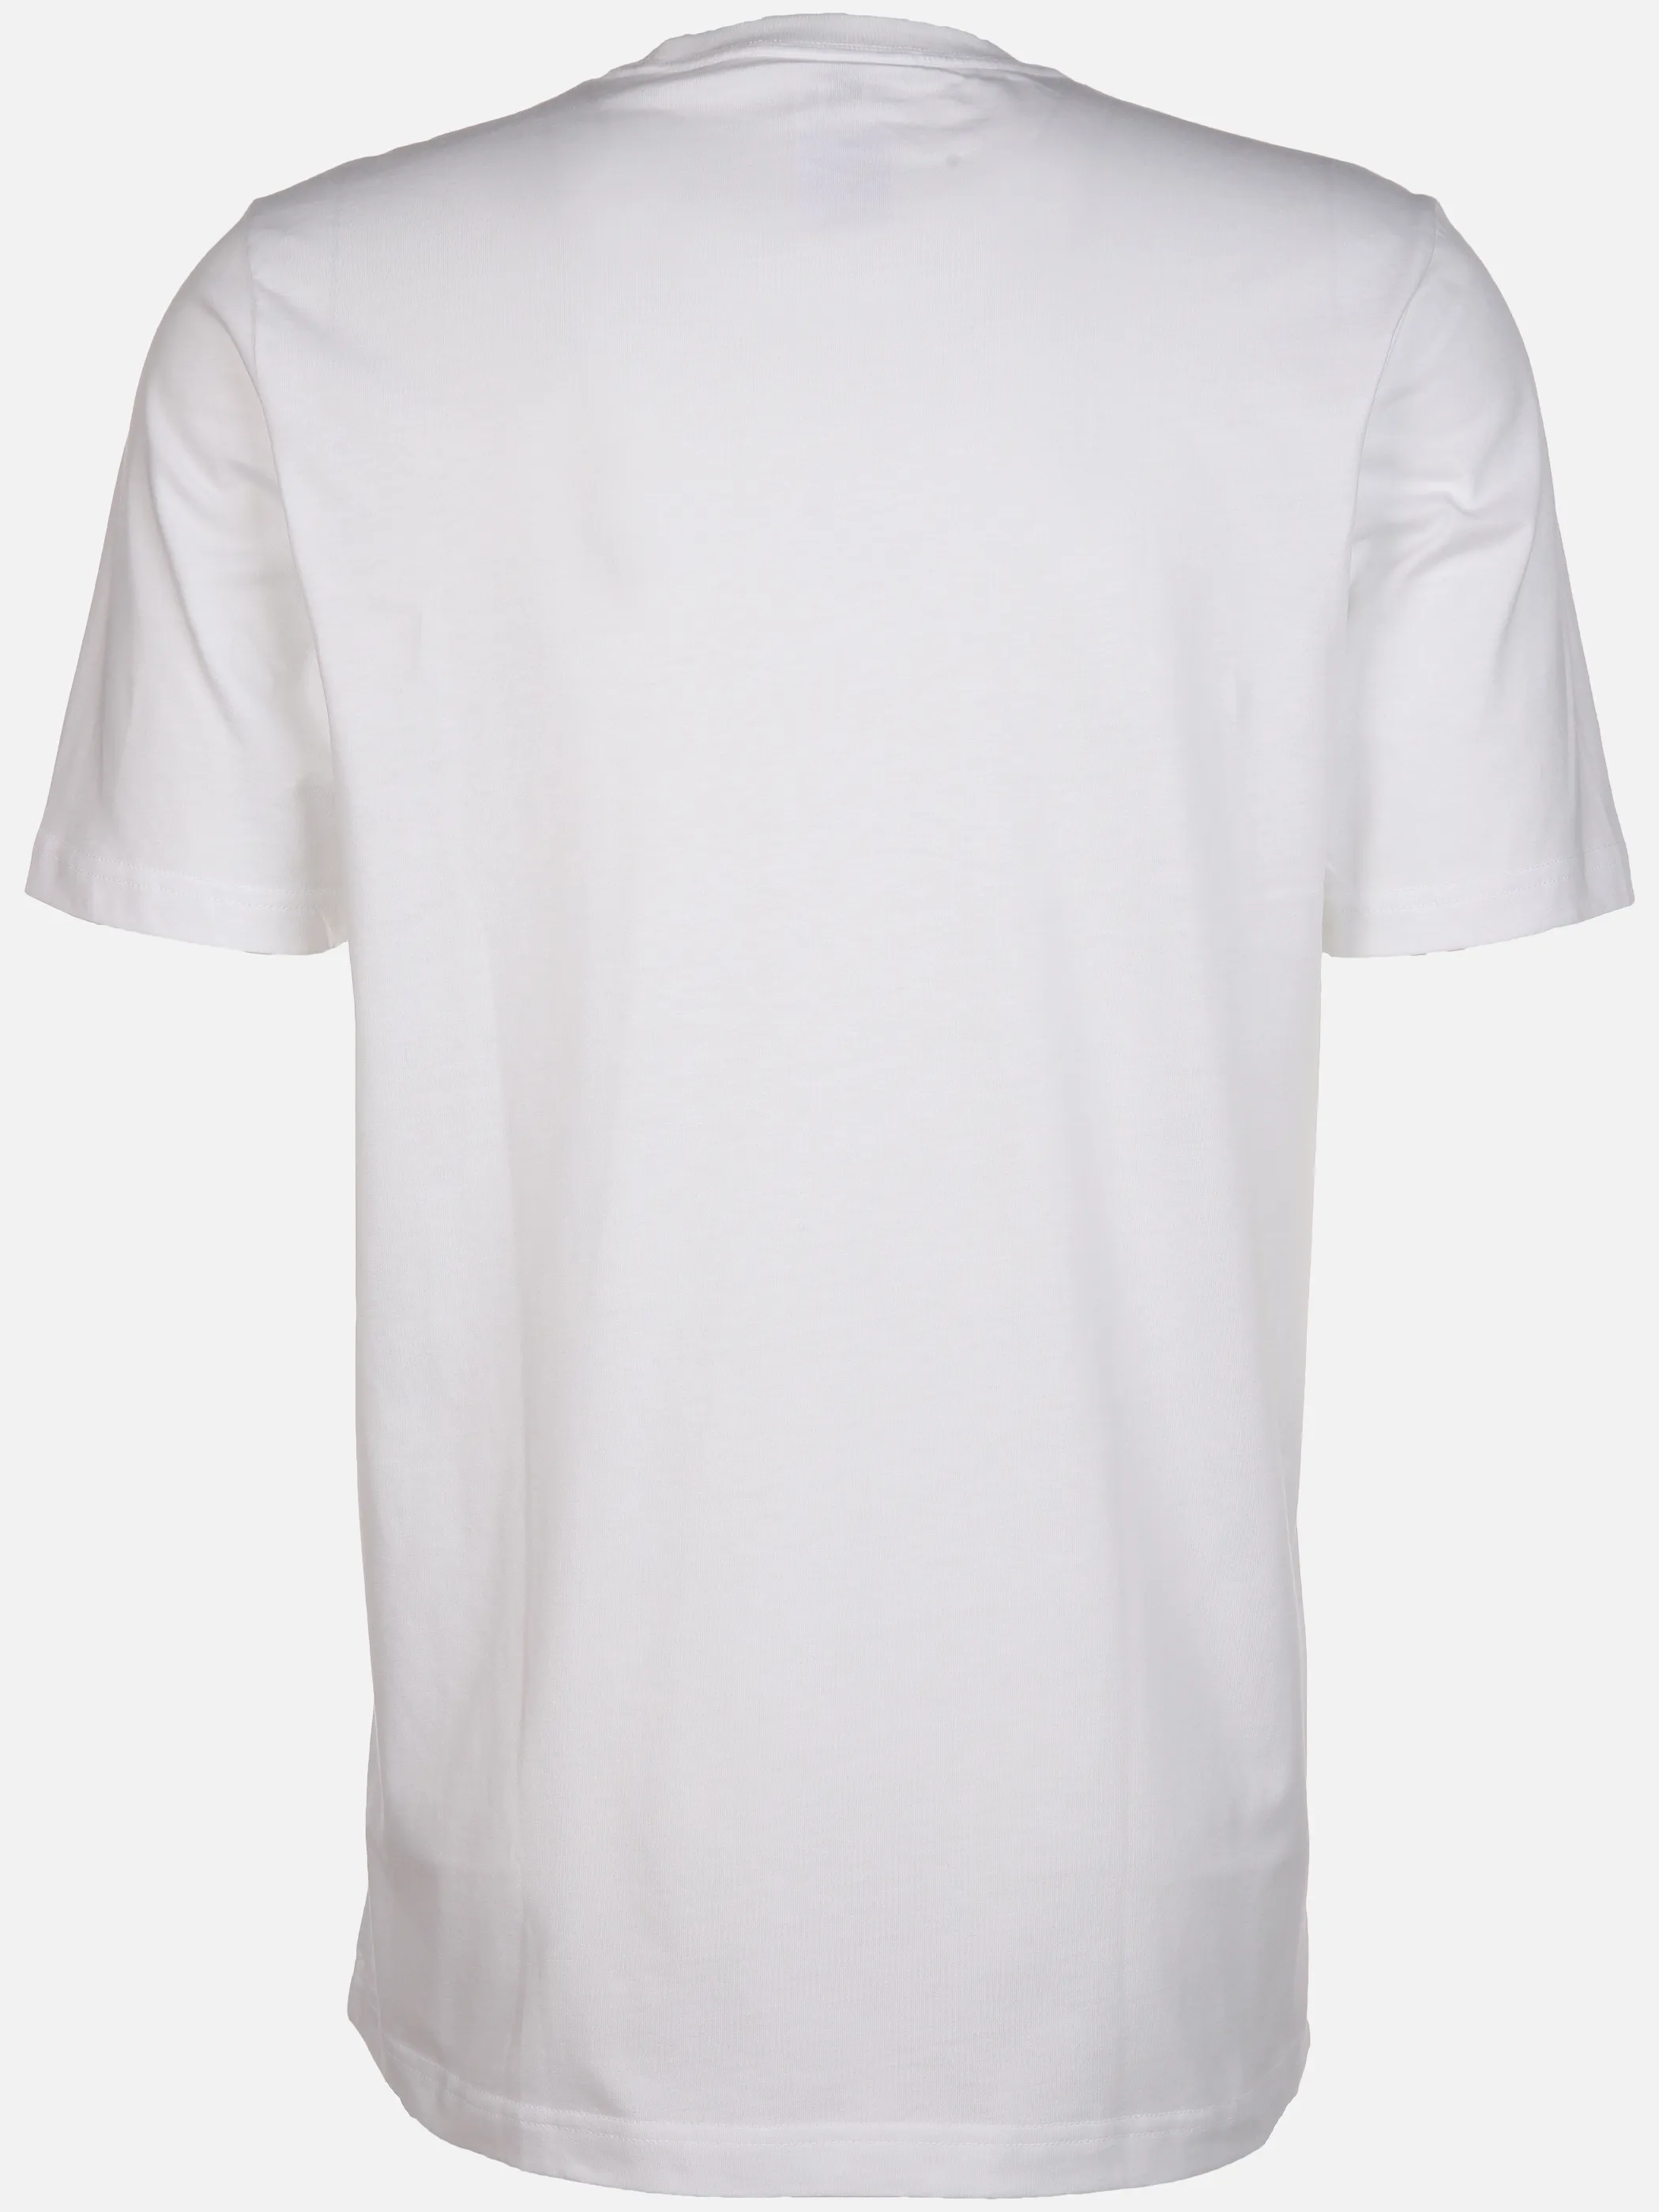 Adidas IC9286 He-T-Shirt weiß Weiß 898906 000 2